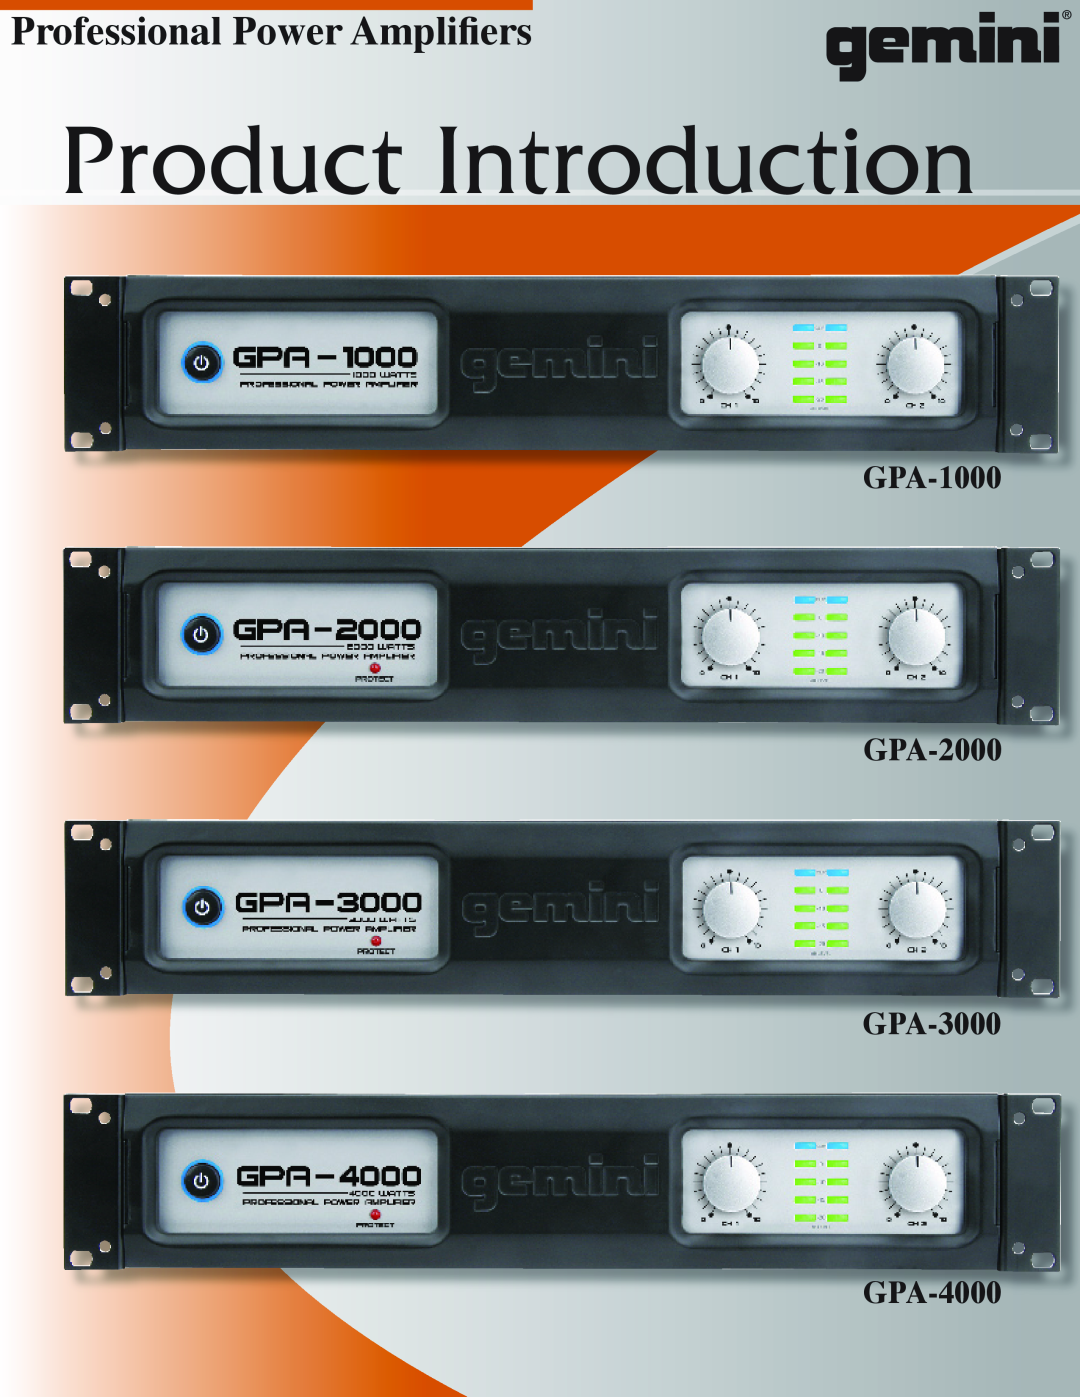 Gemini manual Product Introduction, Professional Power Amplifiers, GPA-1000 GPA-2000 GPA-3000, GPA-4000 